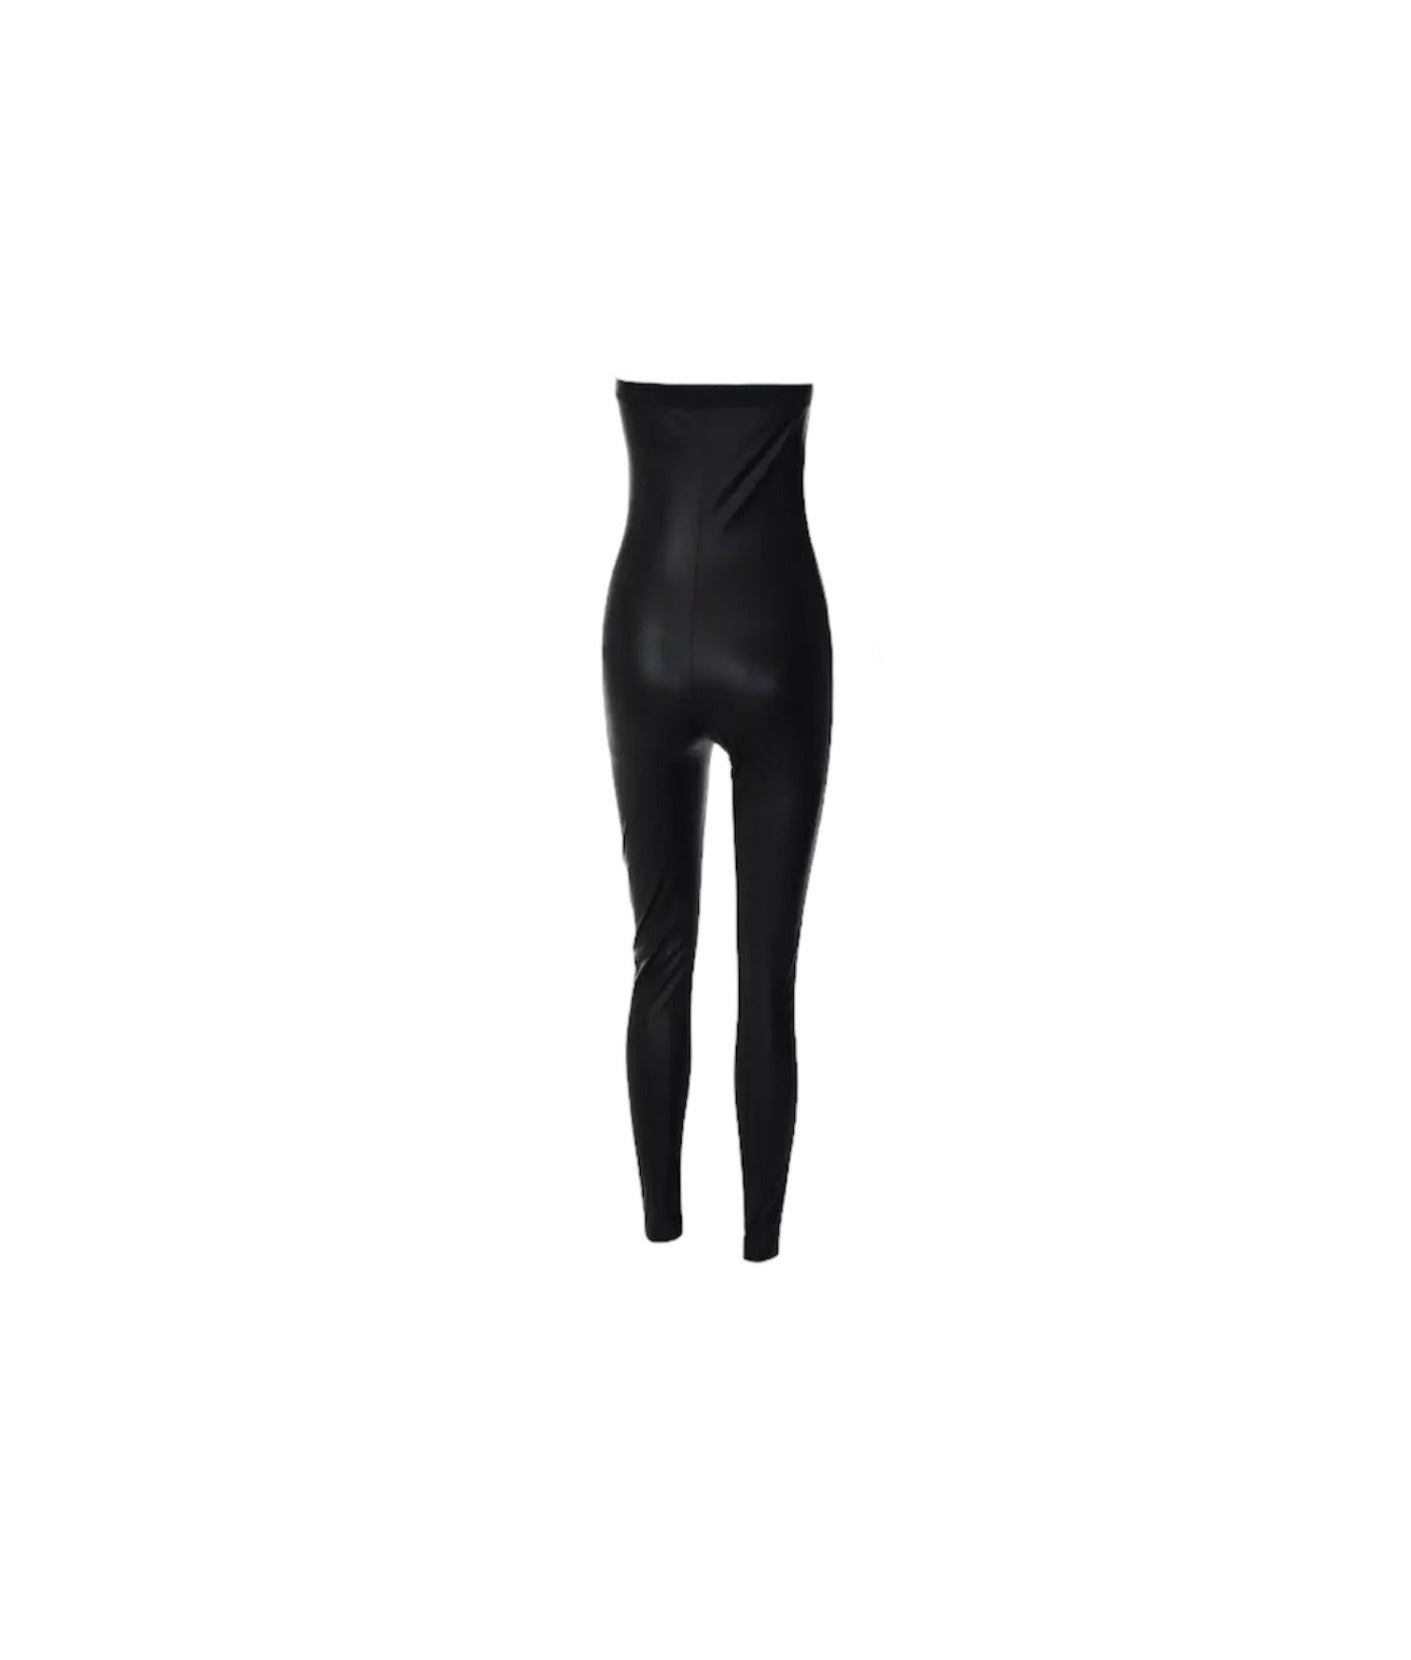 Bad Behavior PU Leather Sleeveless Jumpsuit - Dezired Beauty Boutique